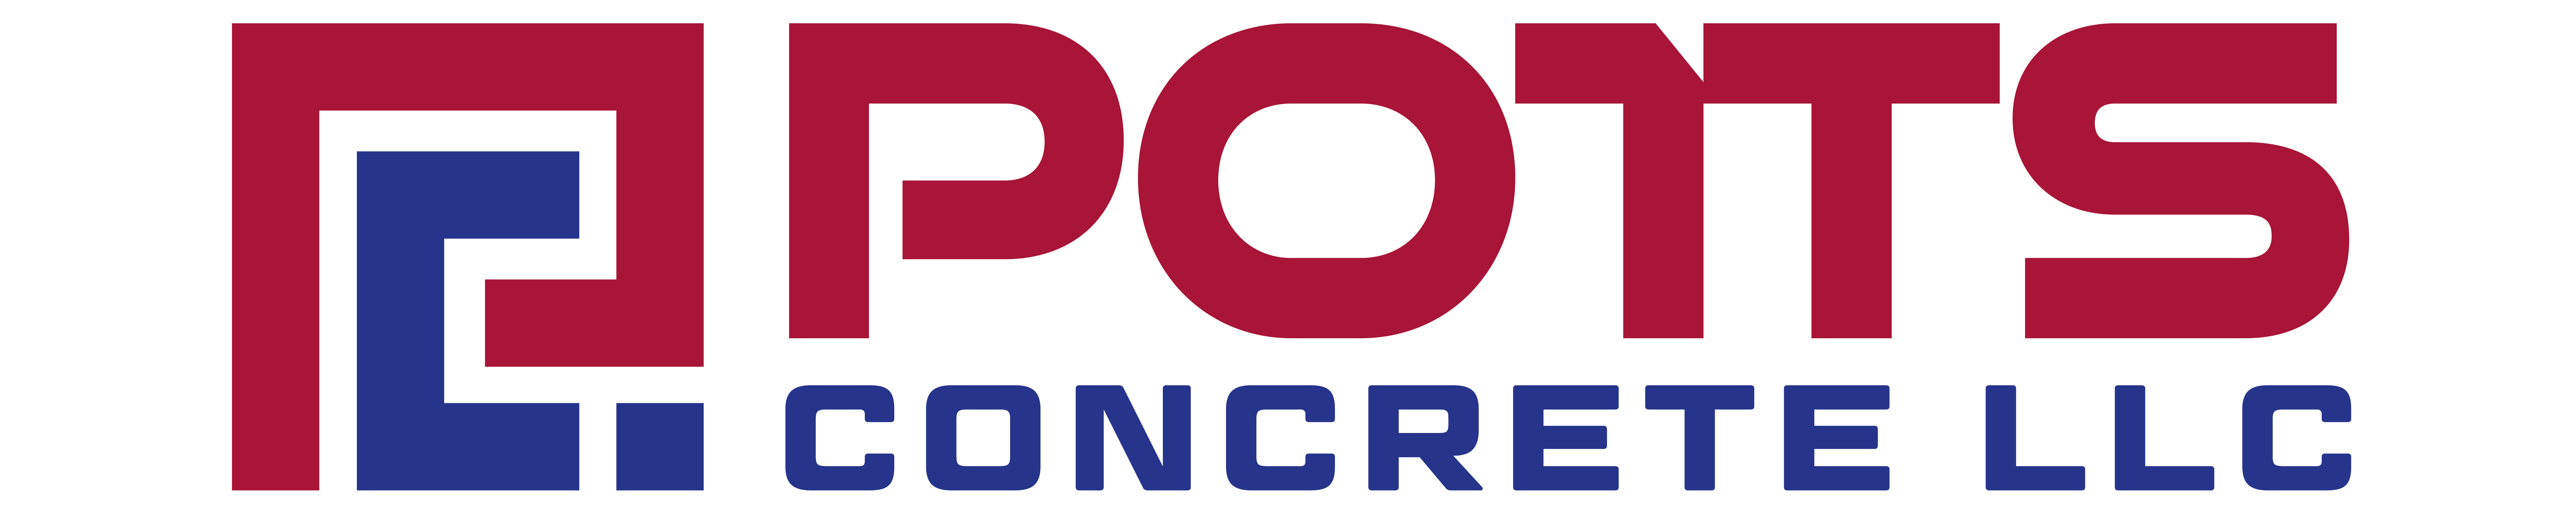 Potts Concrete LLC